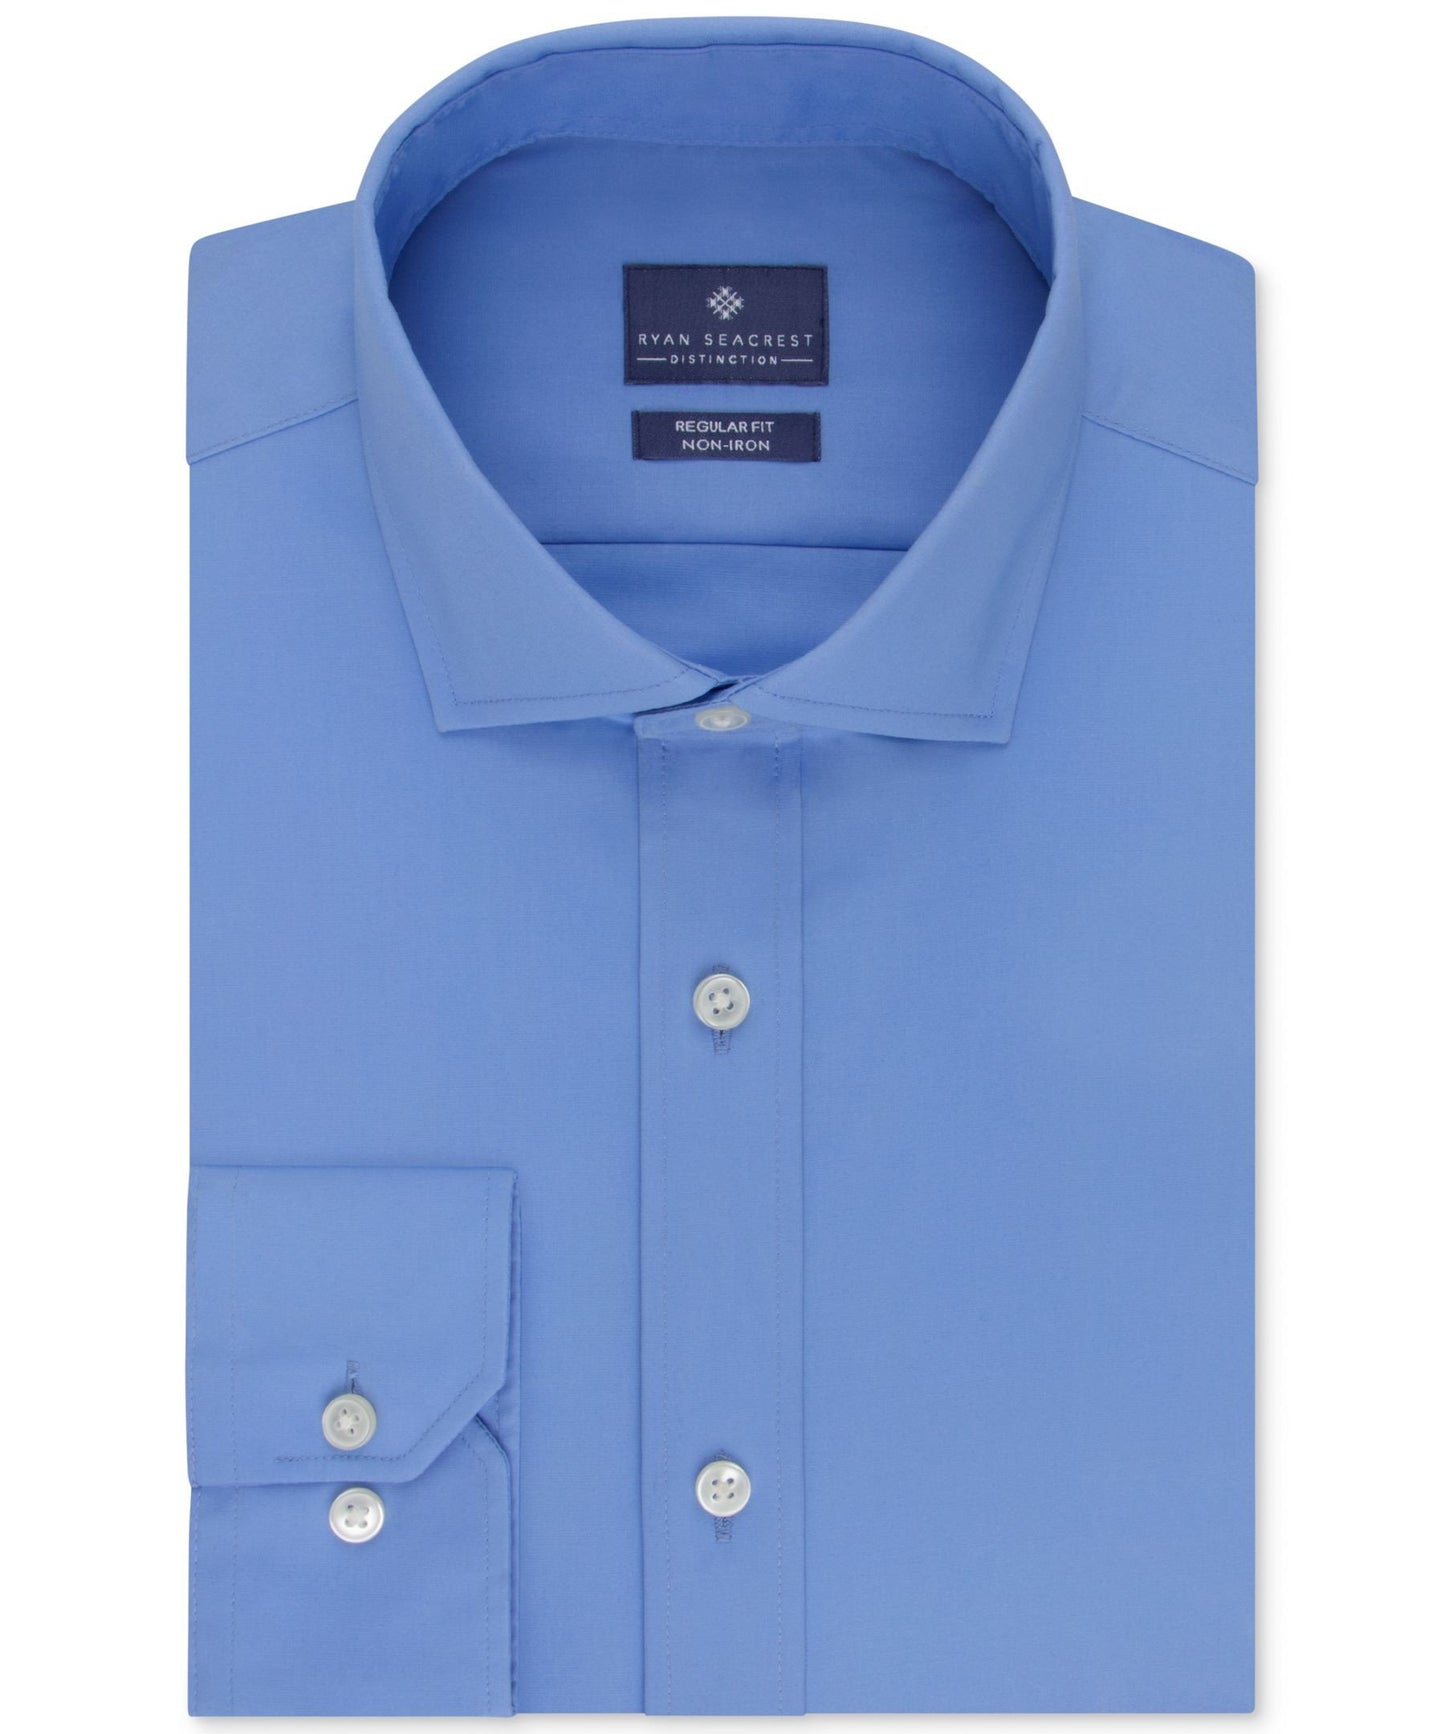 Ryan Seacrest Distinction Non-Iron Solid Dress Shirt